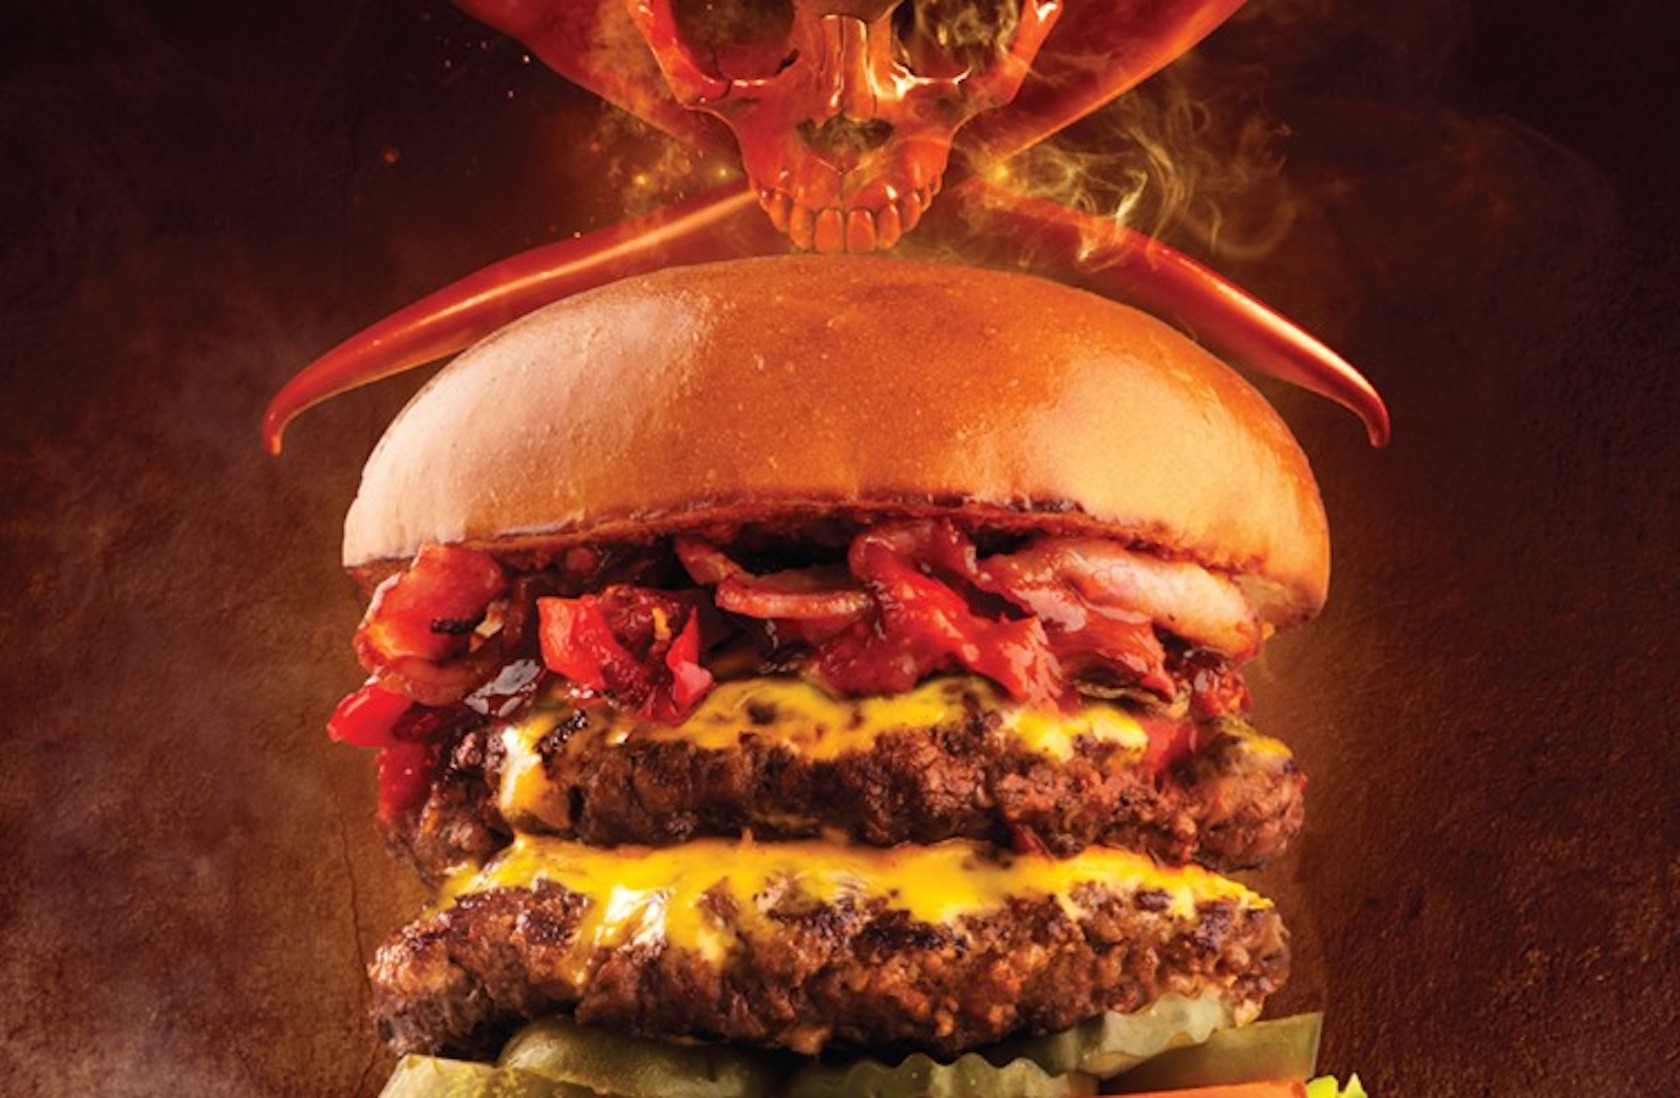 death-burger-national-burger-day